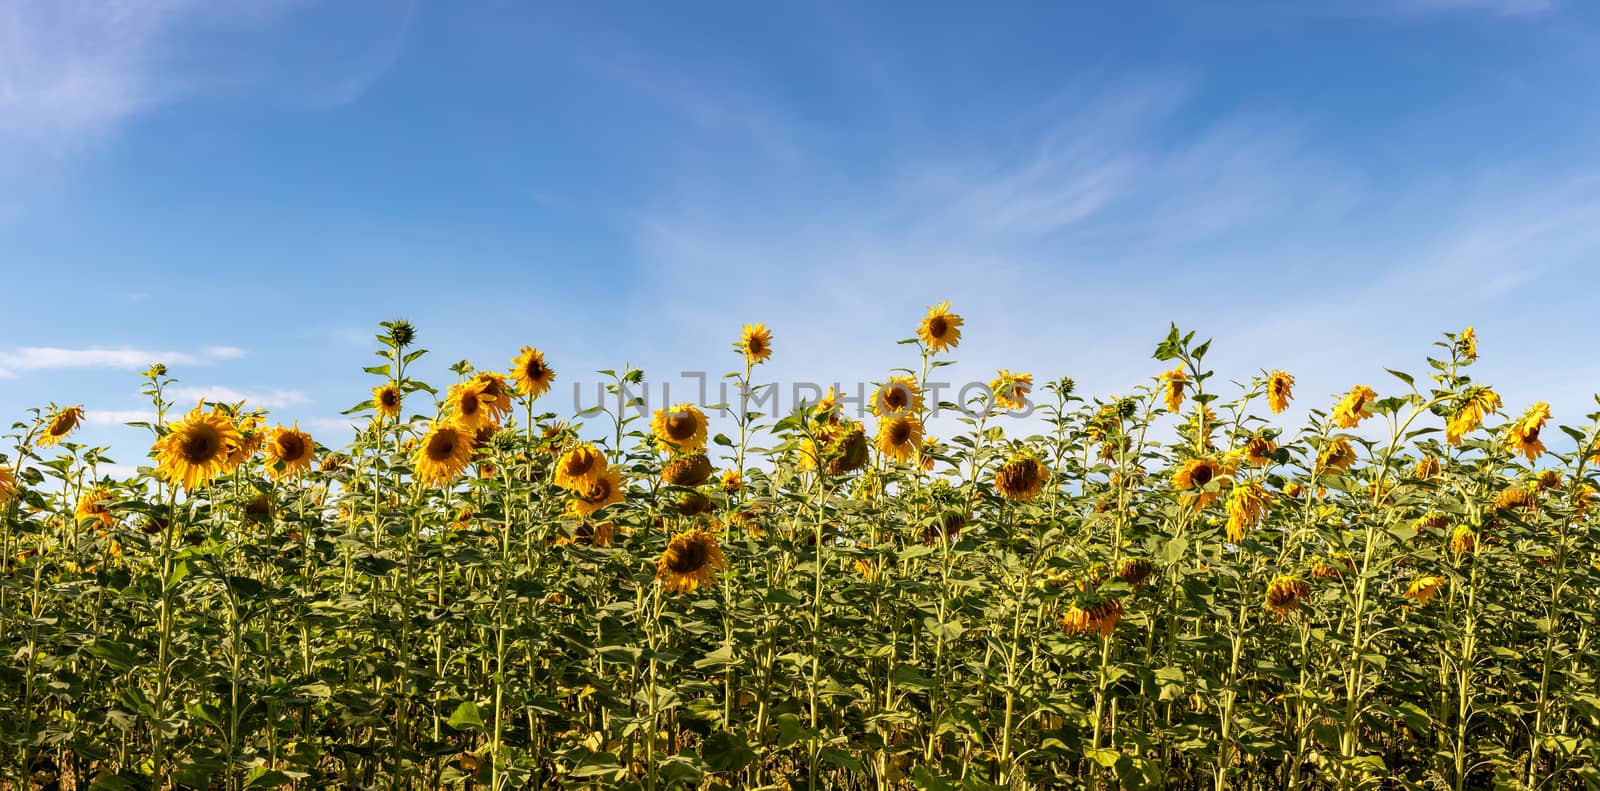 Shot of sunflower field on a blue sky background by DamantisZ